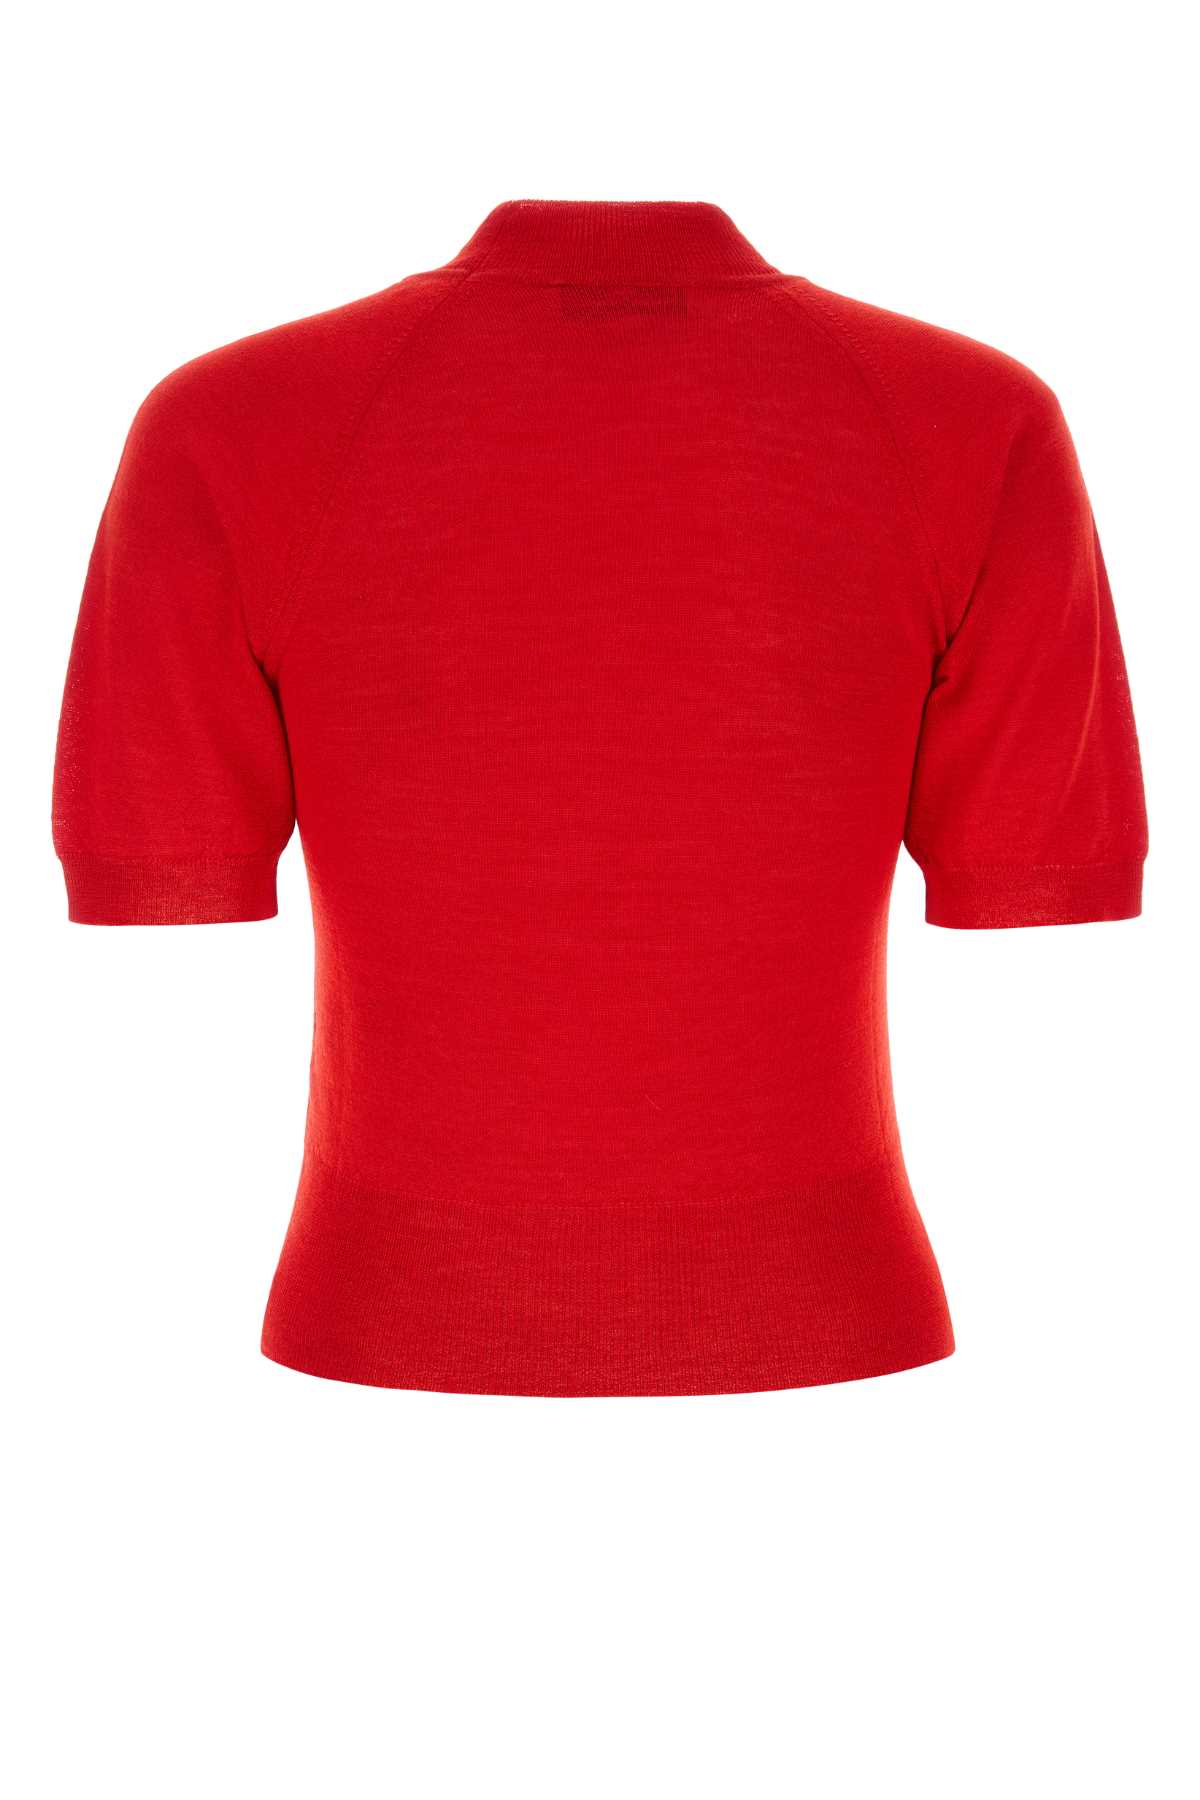 Vivienne Westwood Red Cotton Blend Bea Jumper In H401